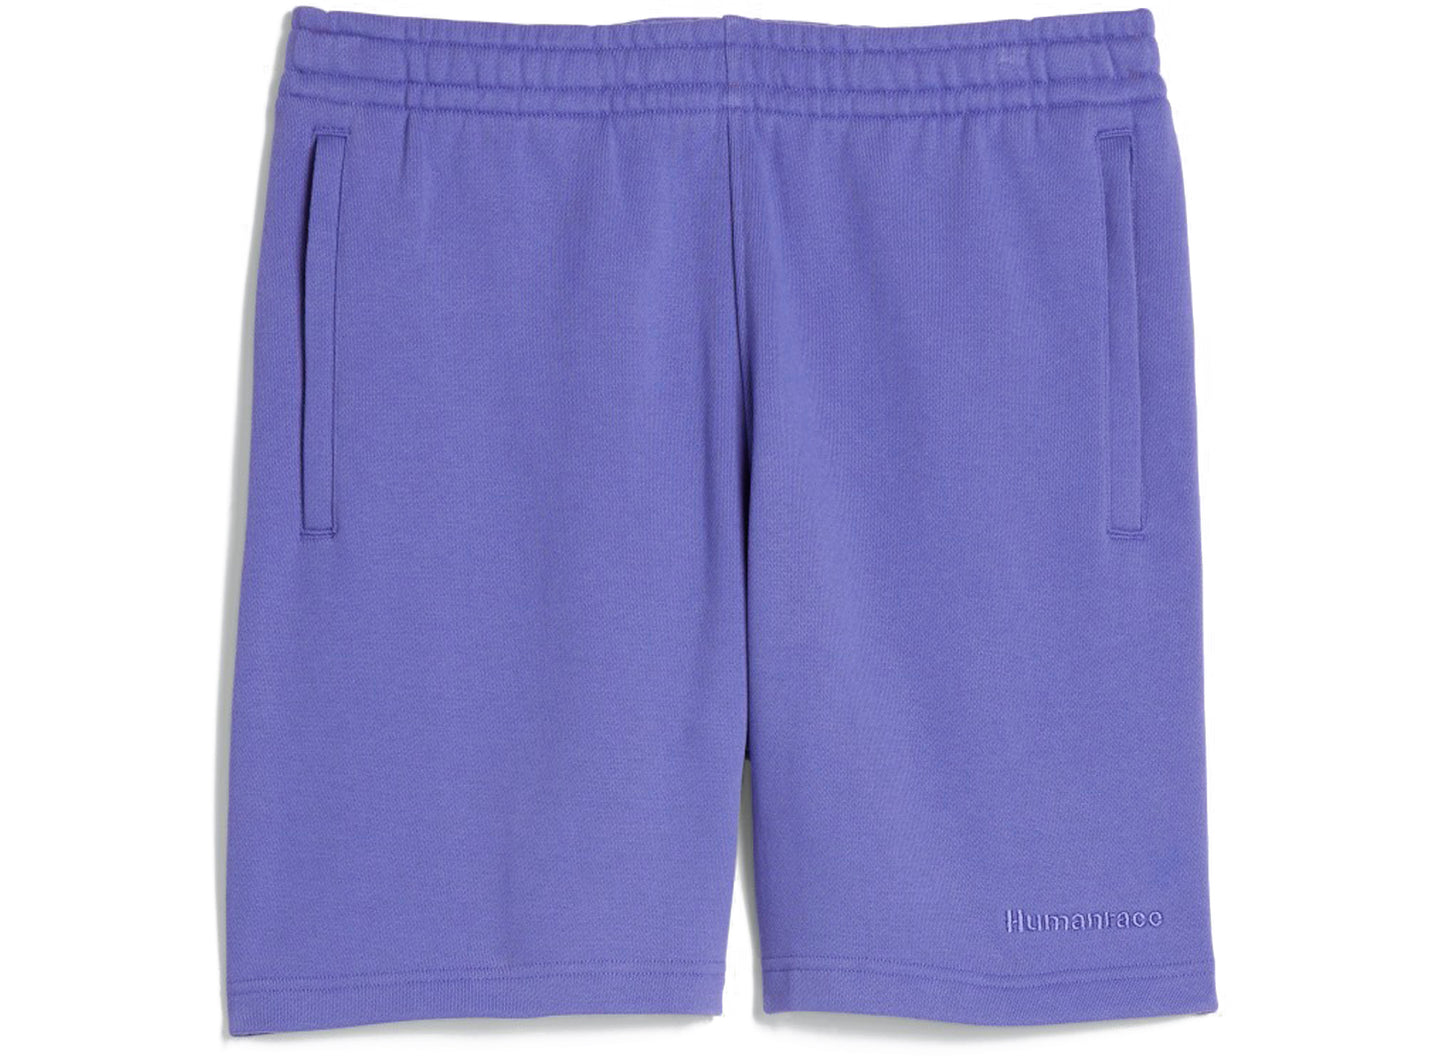 Adidas Pharrell Williams Basics Shorts in Purple